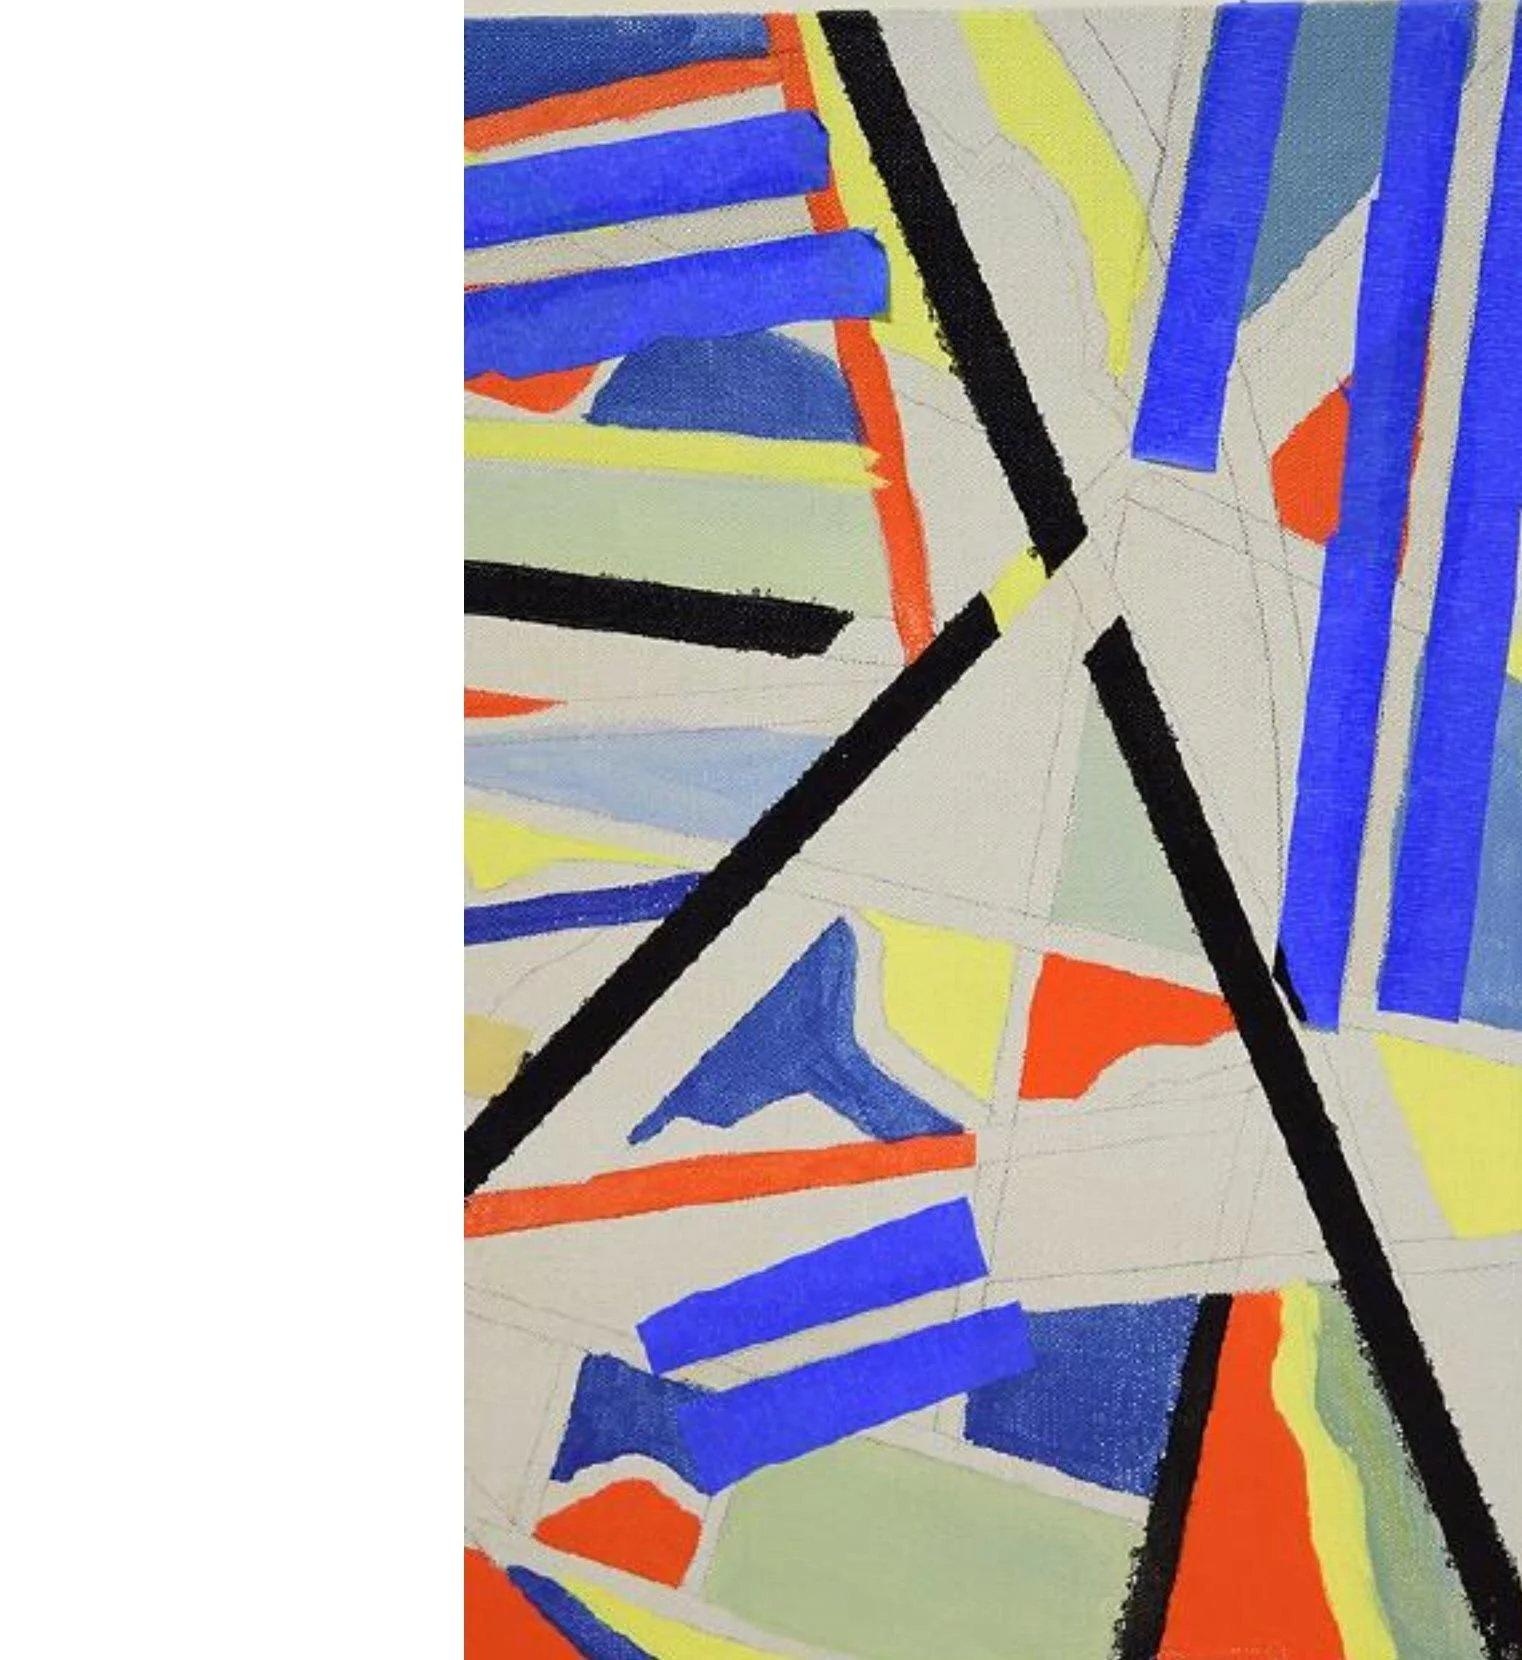 Óleo sobre lienzo posmoderno expresionista abstracto de bordes duros por Salvatore Grippi Expresionista en venta